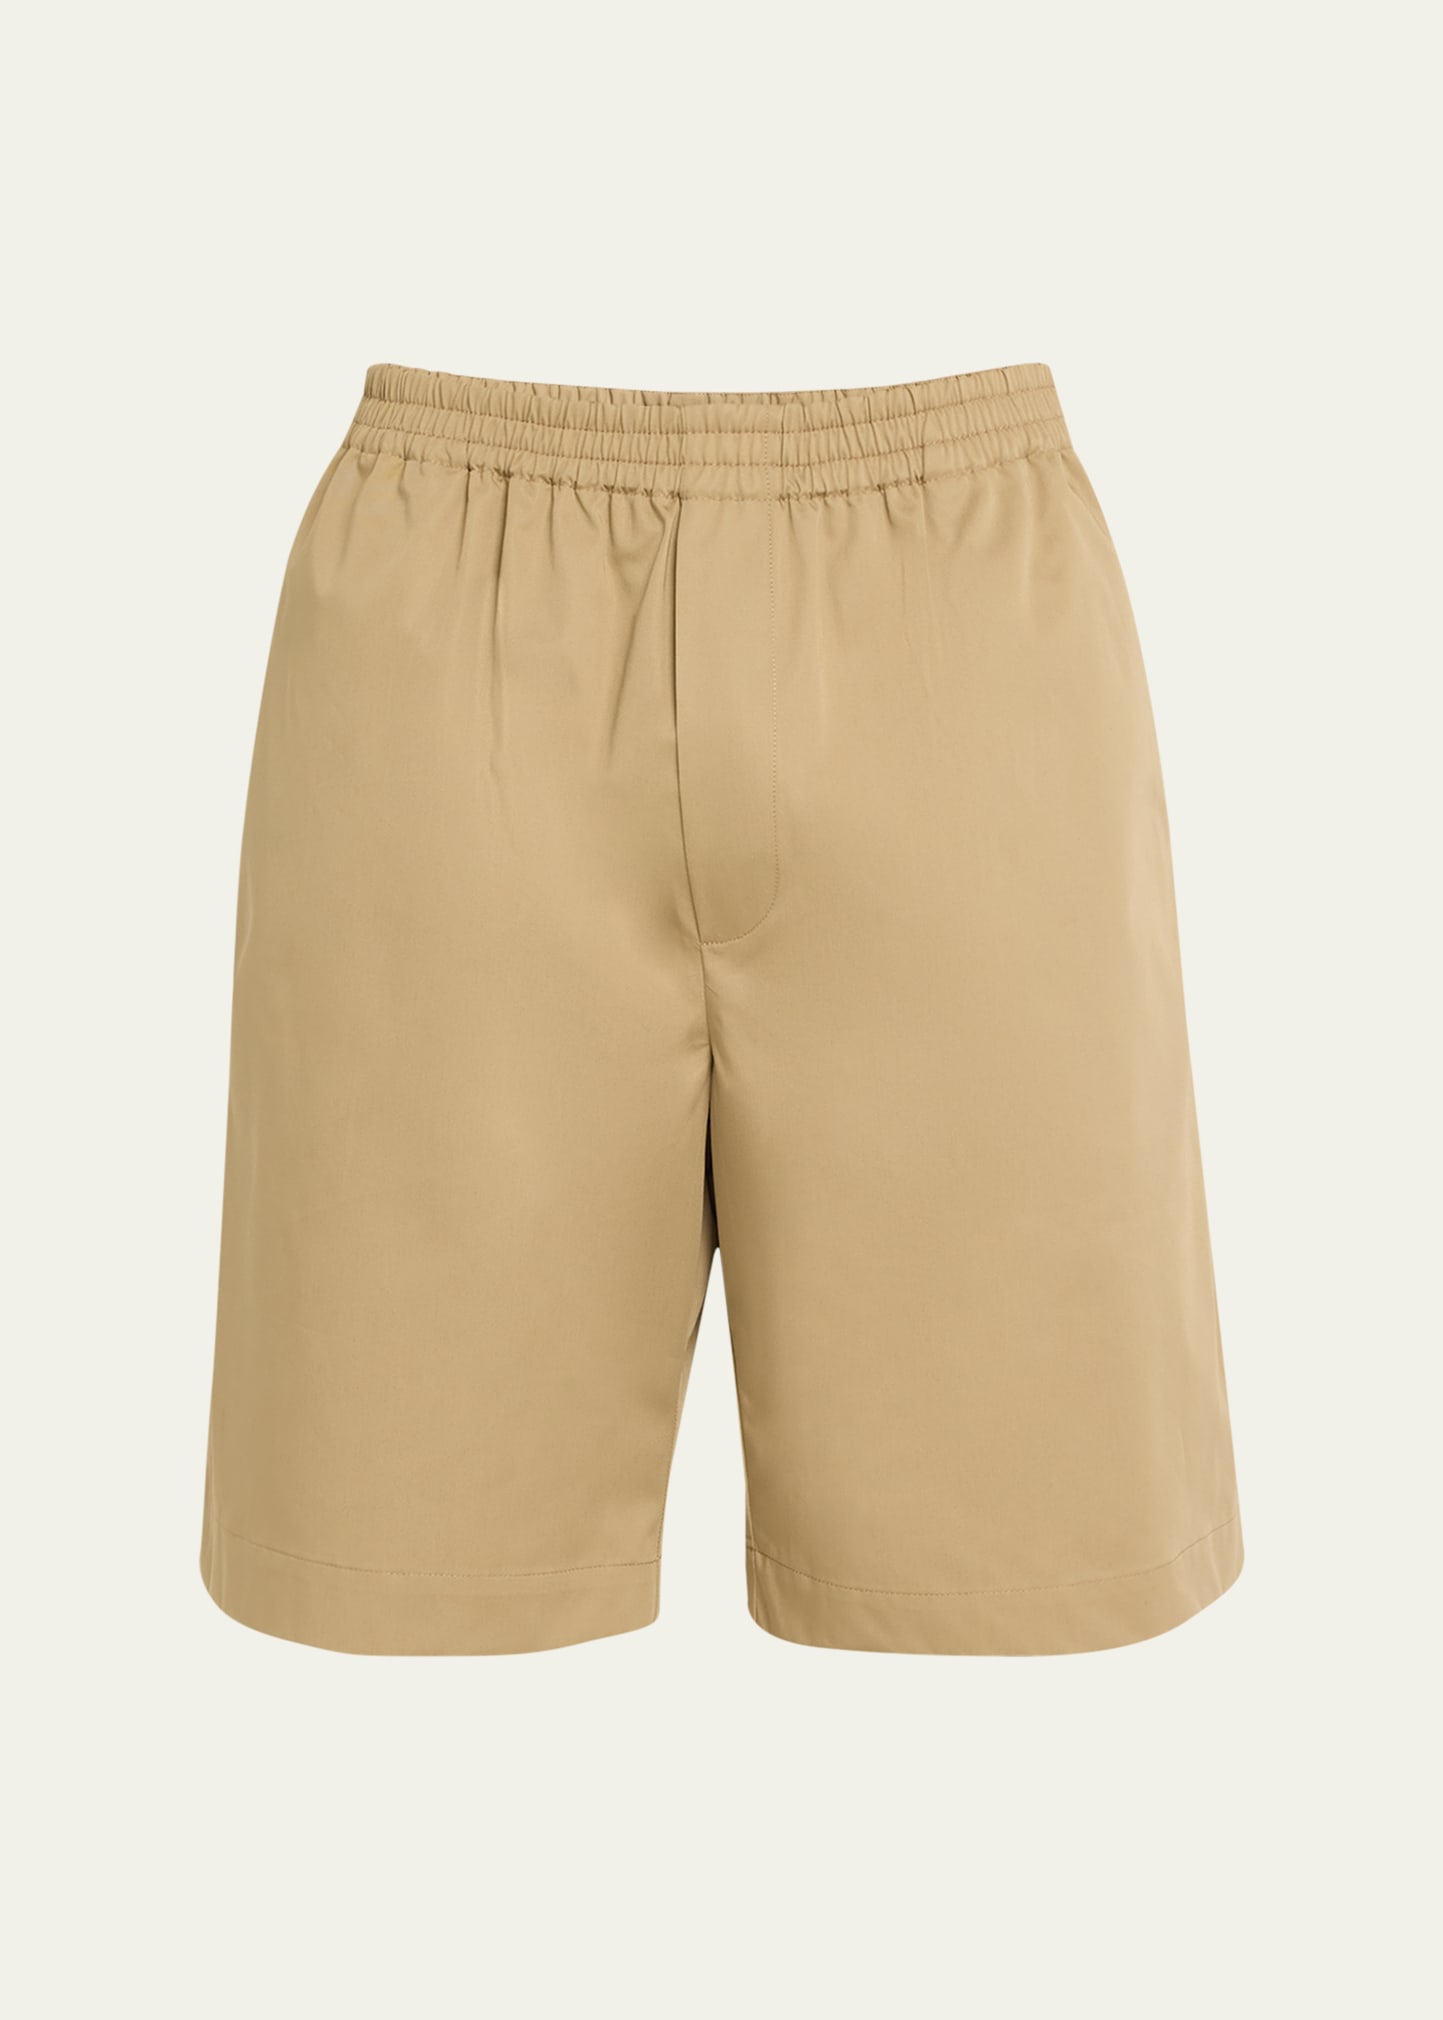 Men's Elastic-Waist Cotton Shorts